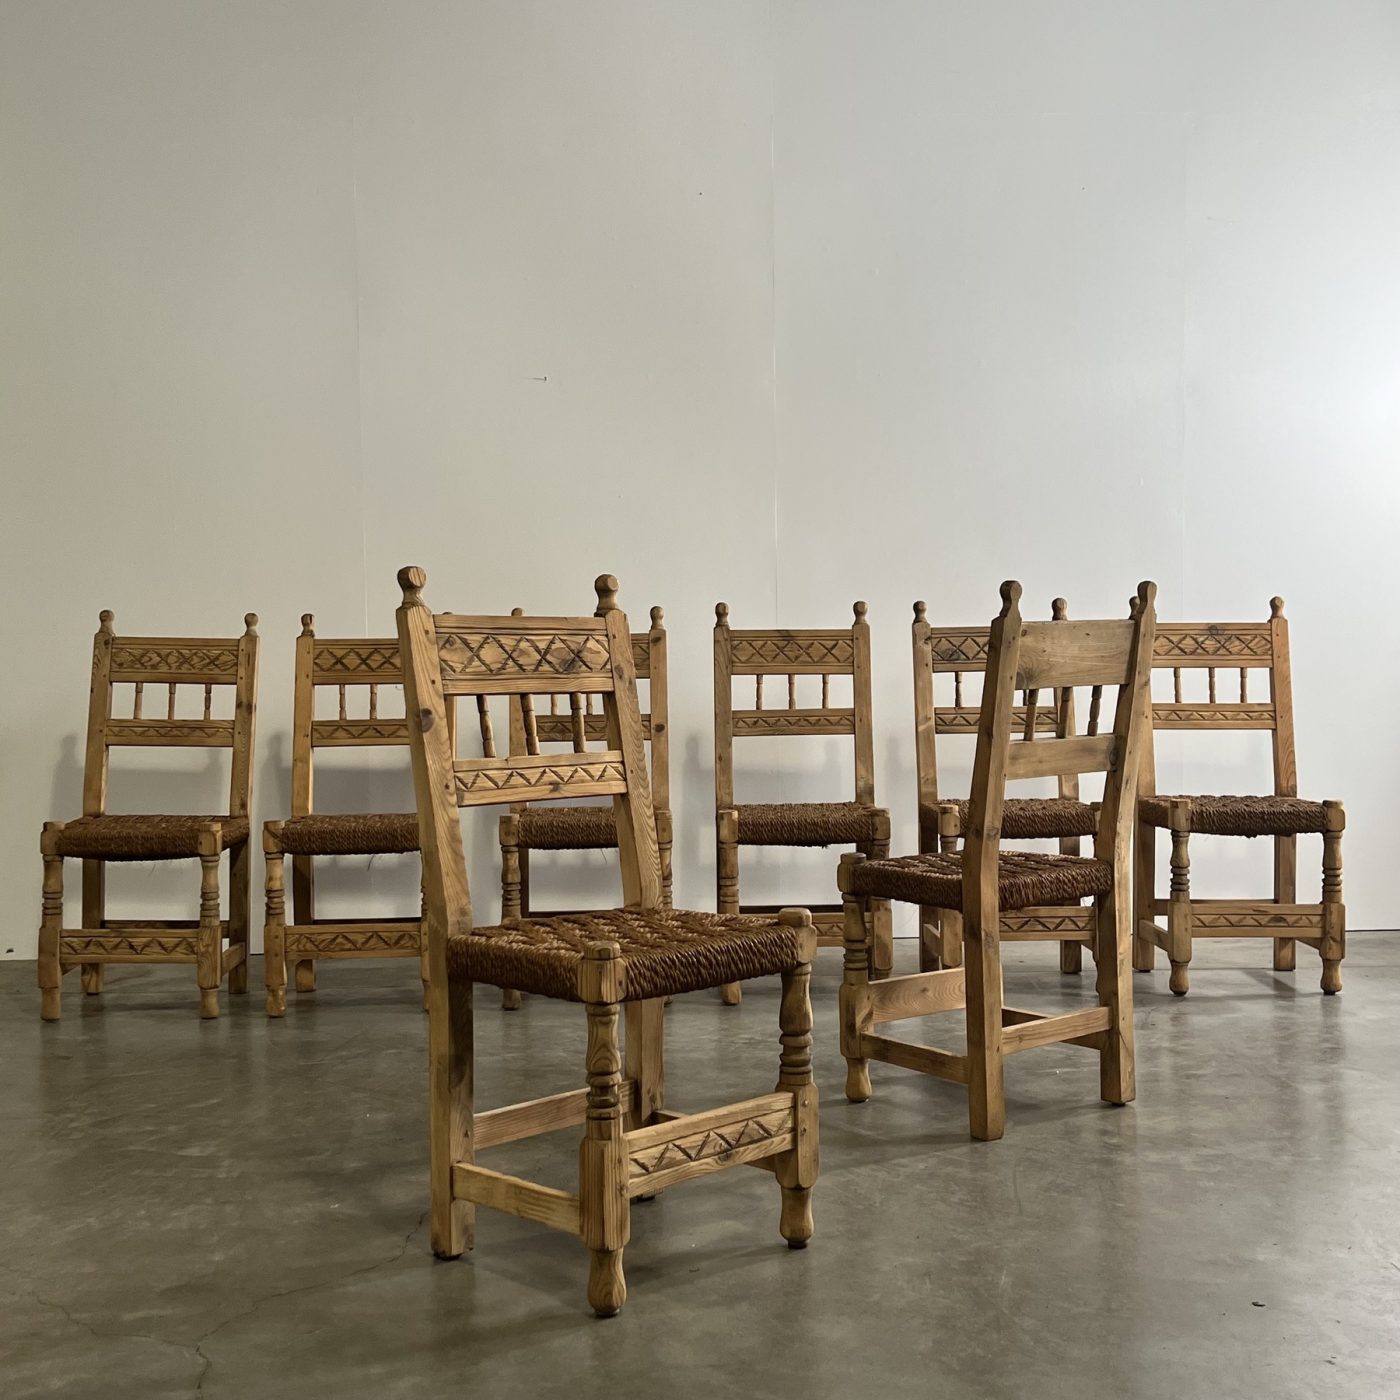 objet-vagabond-rope-chairs0008